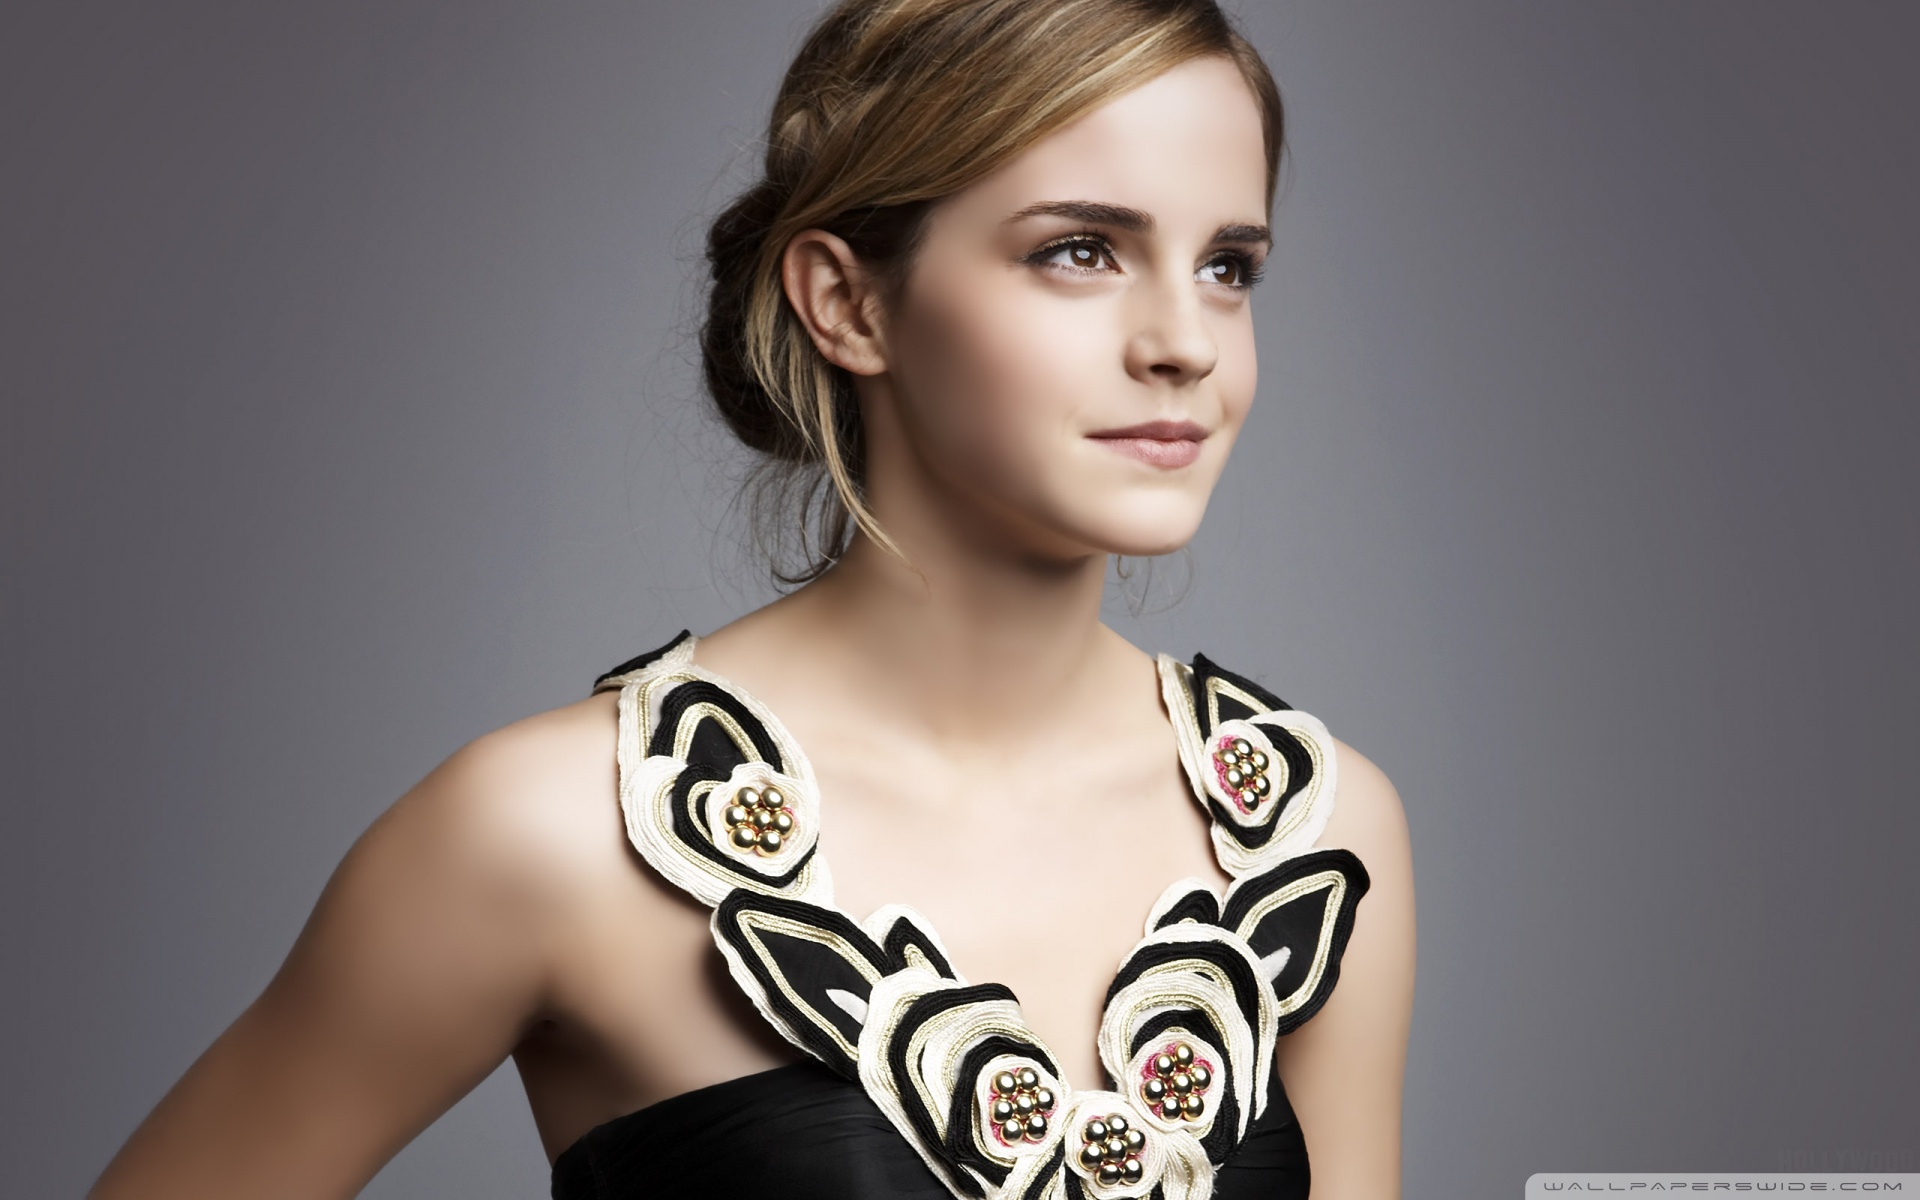 Fond d'ecran Emma Watson robe